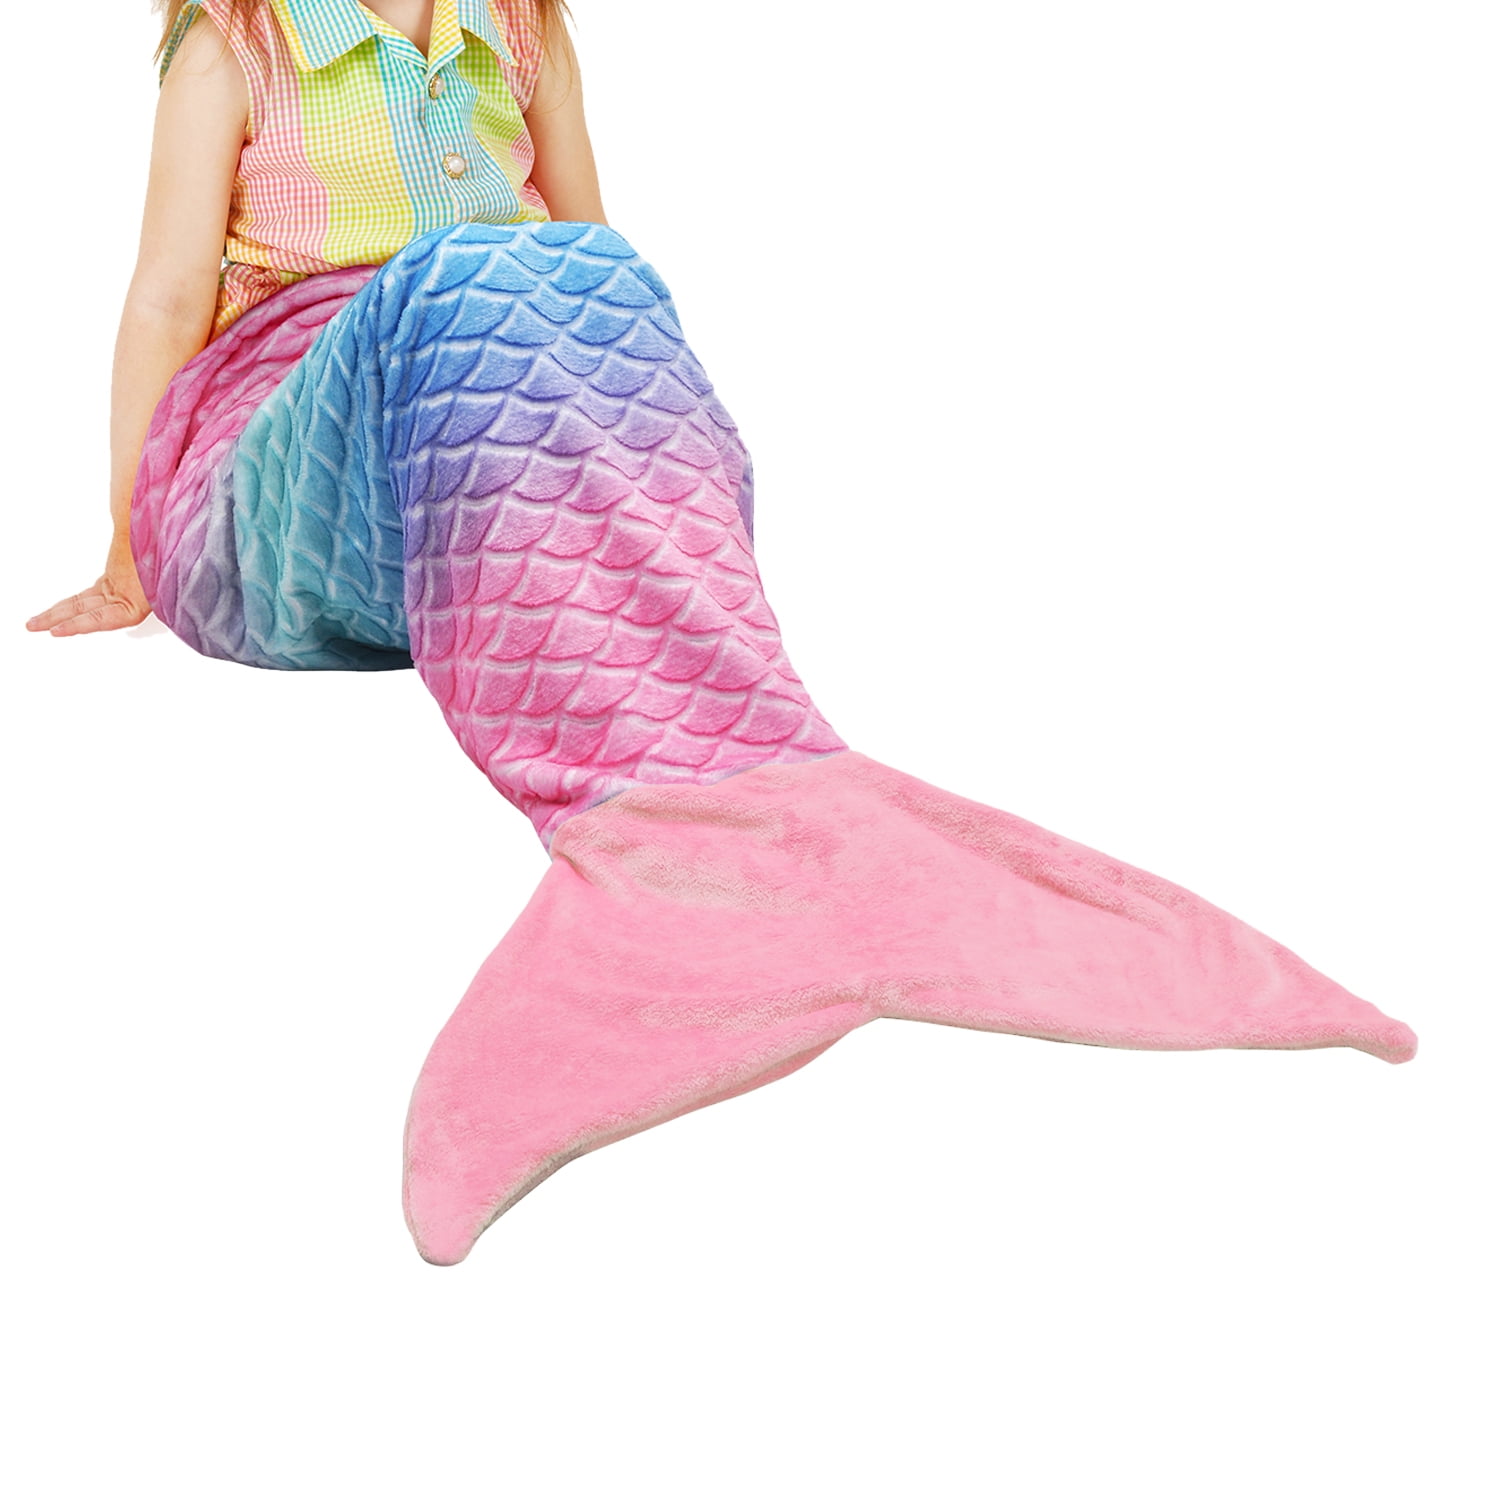 COSUSKET Mermaid Tail Blanket Girls All Seasons Tails Sleeping Bags Rainbow Plush Soft Premium Microfiber Colorful Fish Scale Design Snuggle Blanket